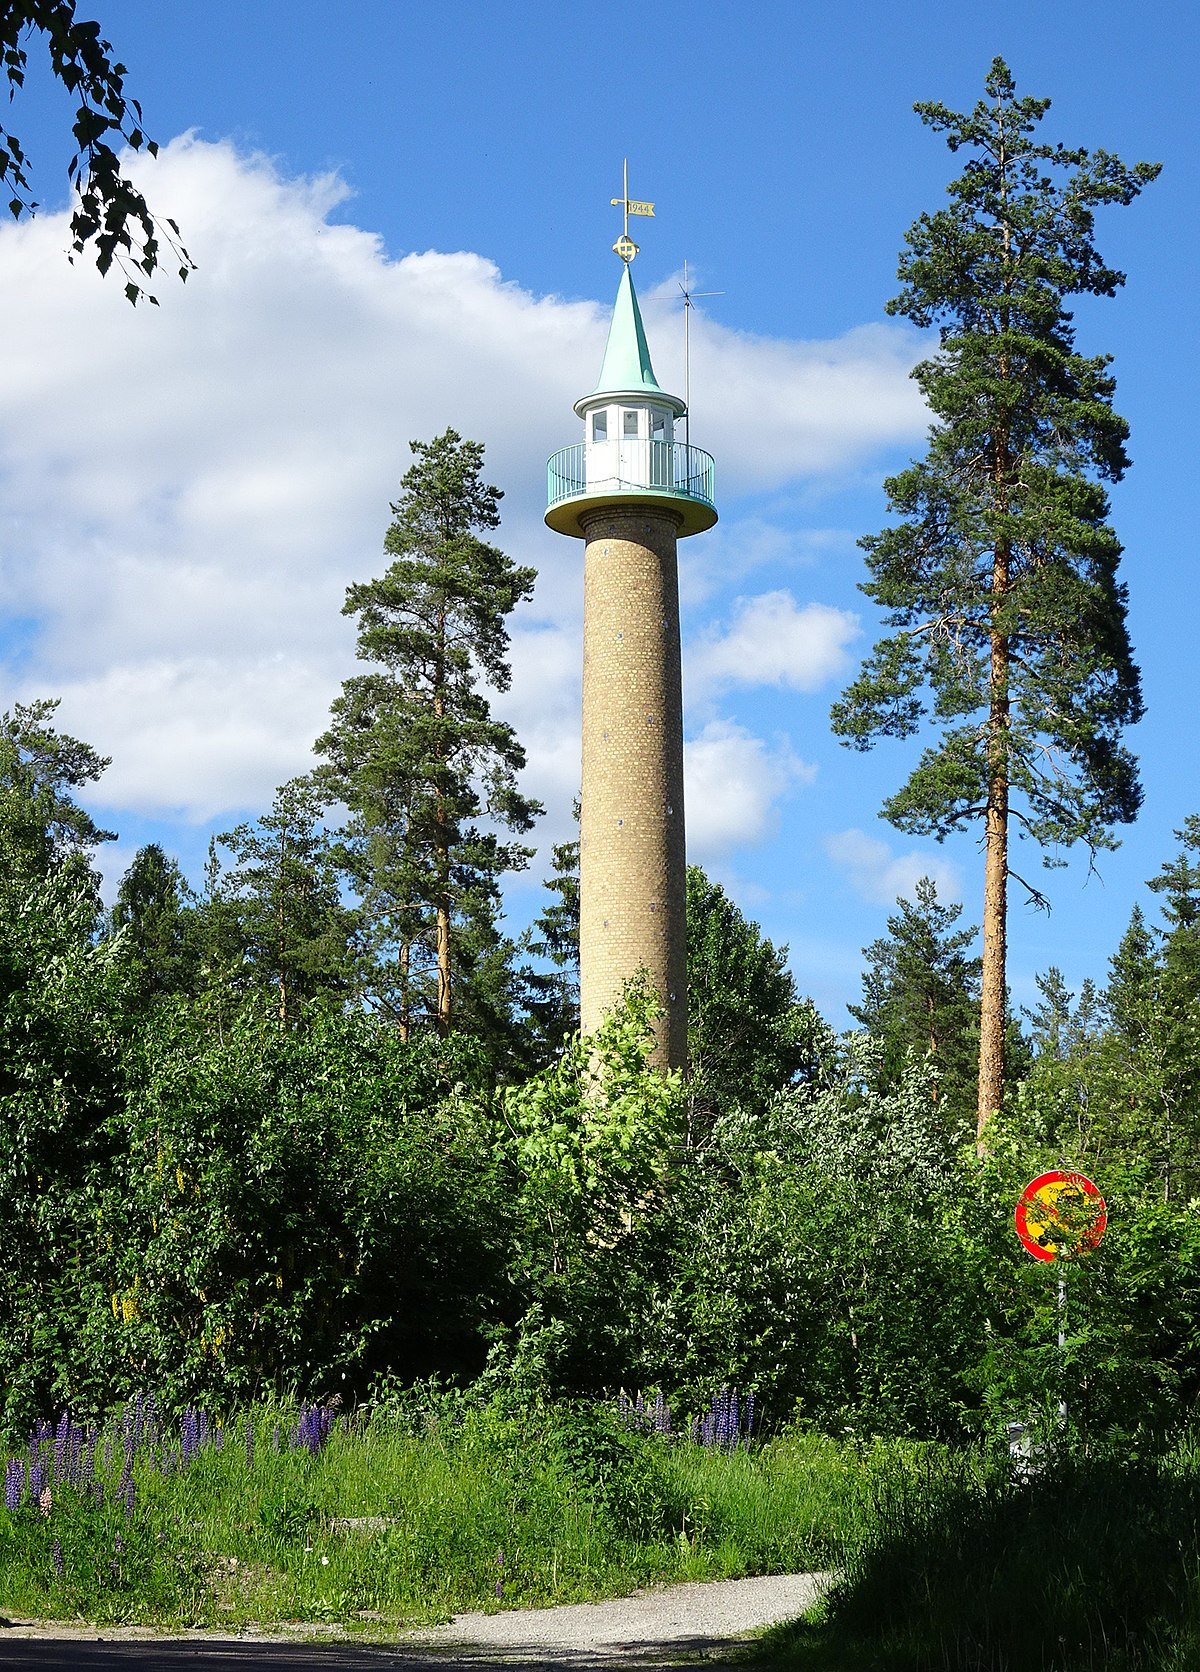 1944 Fagersta airspace surveillance tower